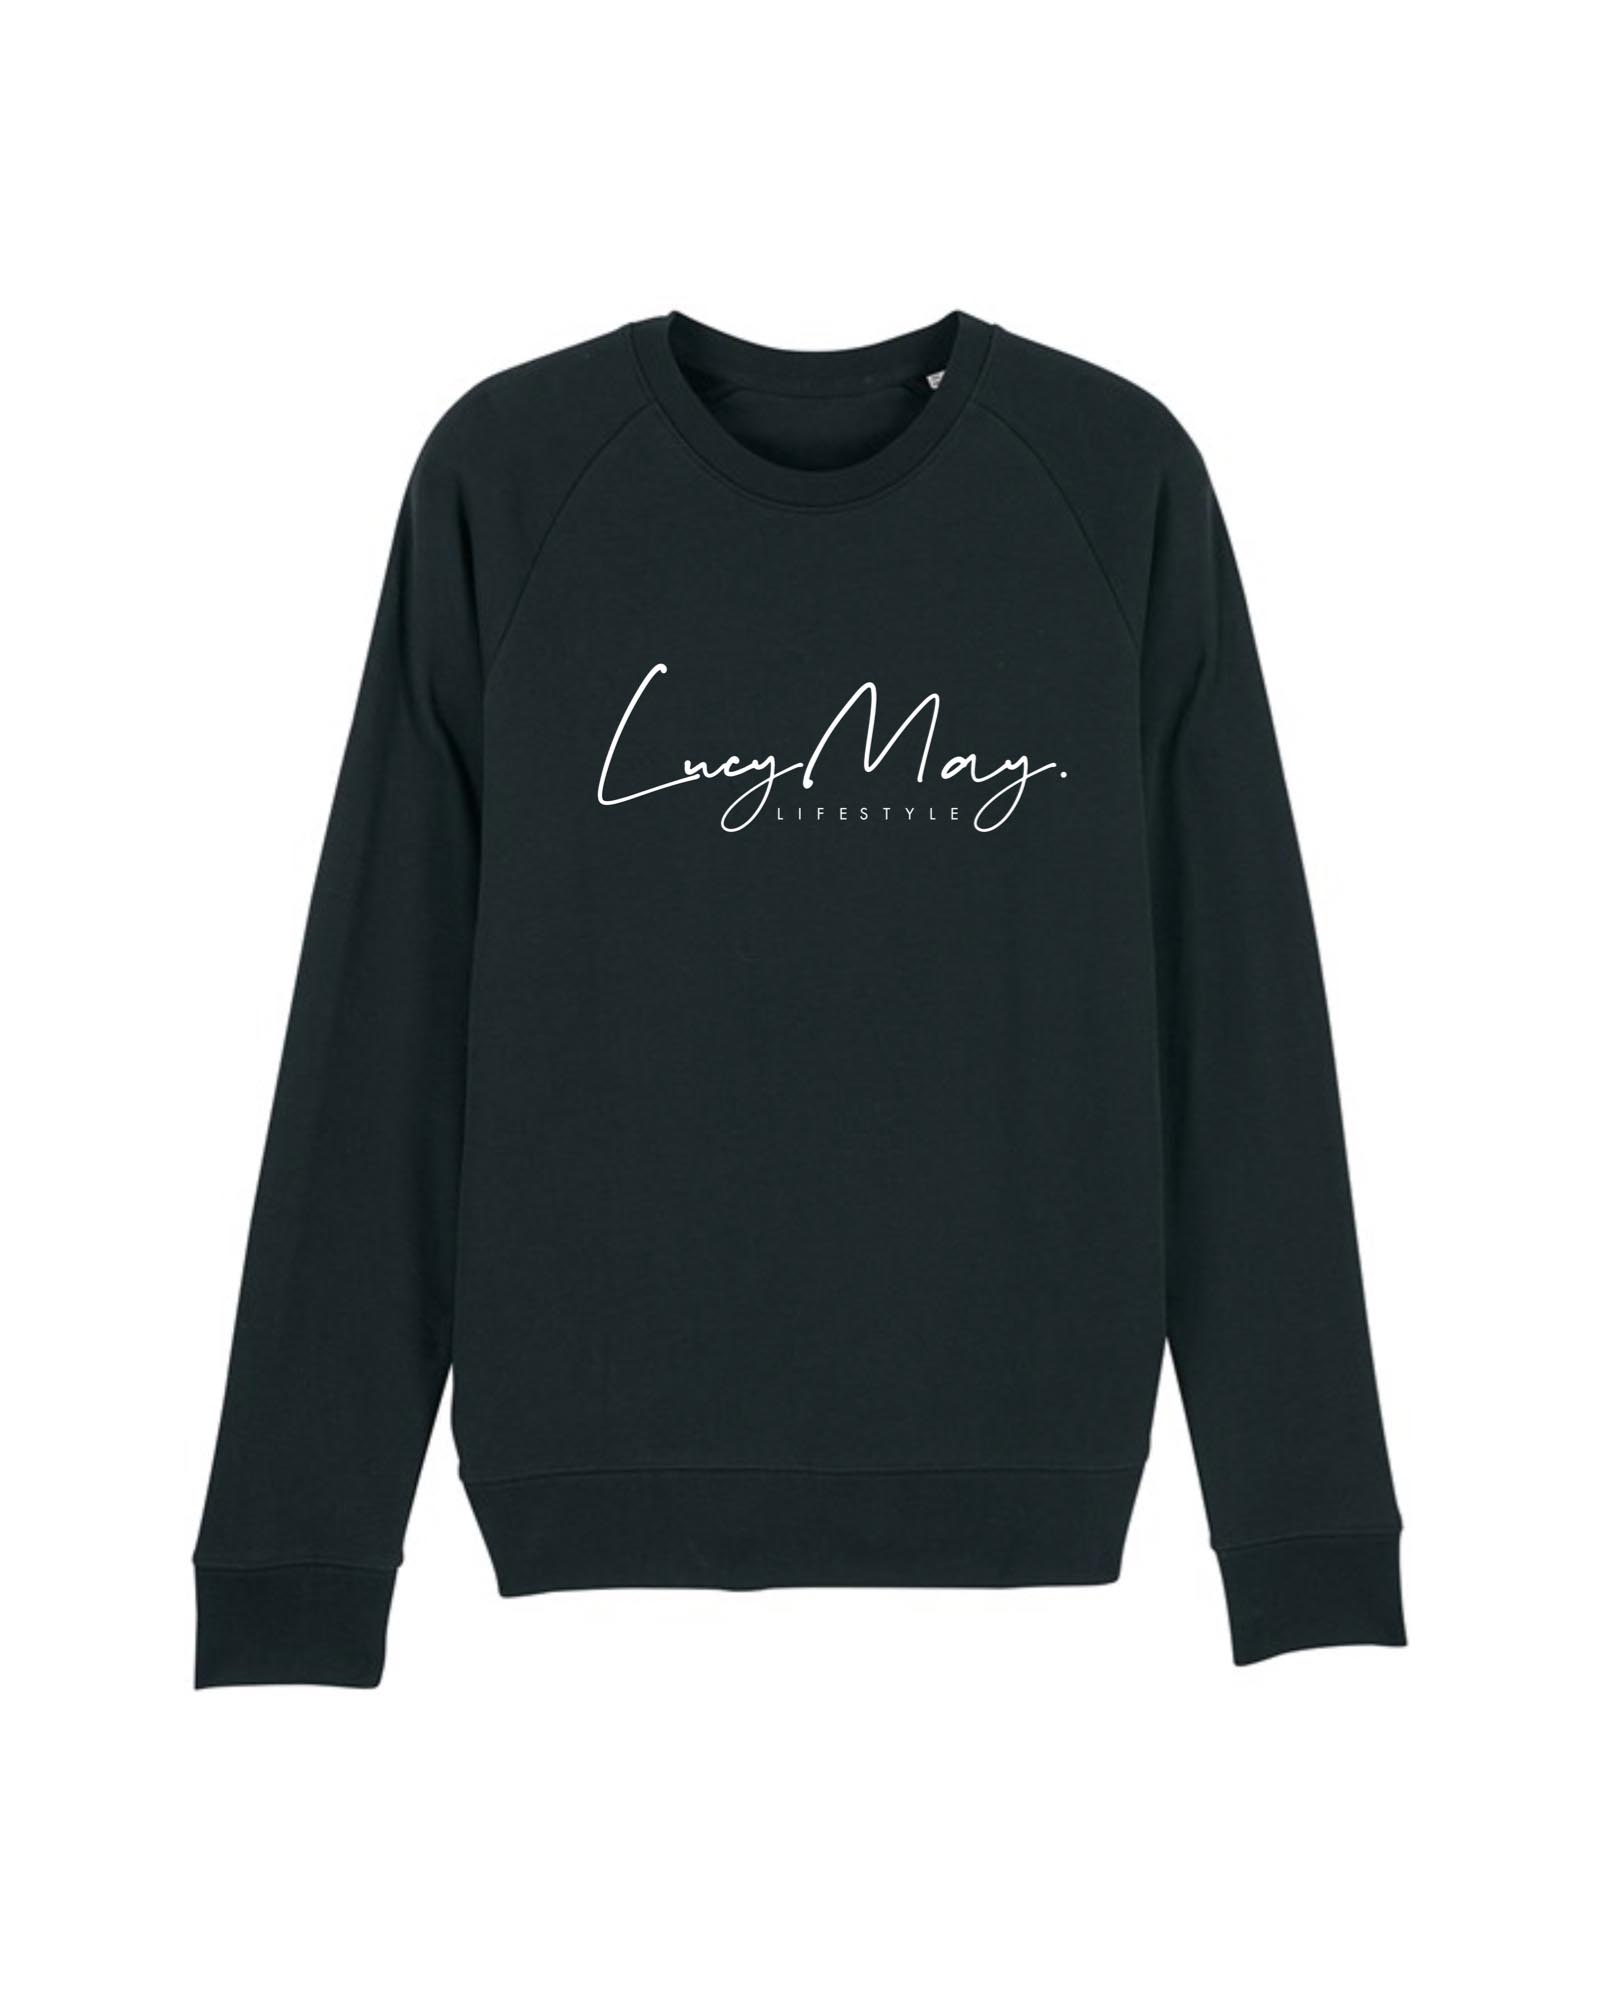 Lucy May Lifestyle Oversized Sweatshirt Black - Lucy May Lifestyle